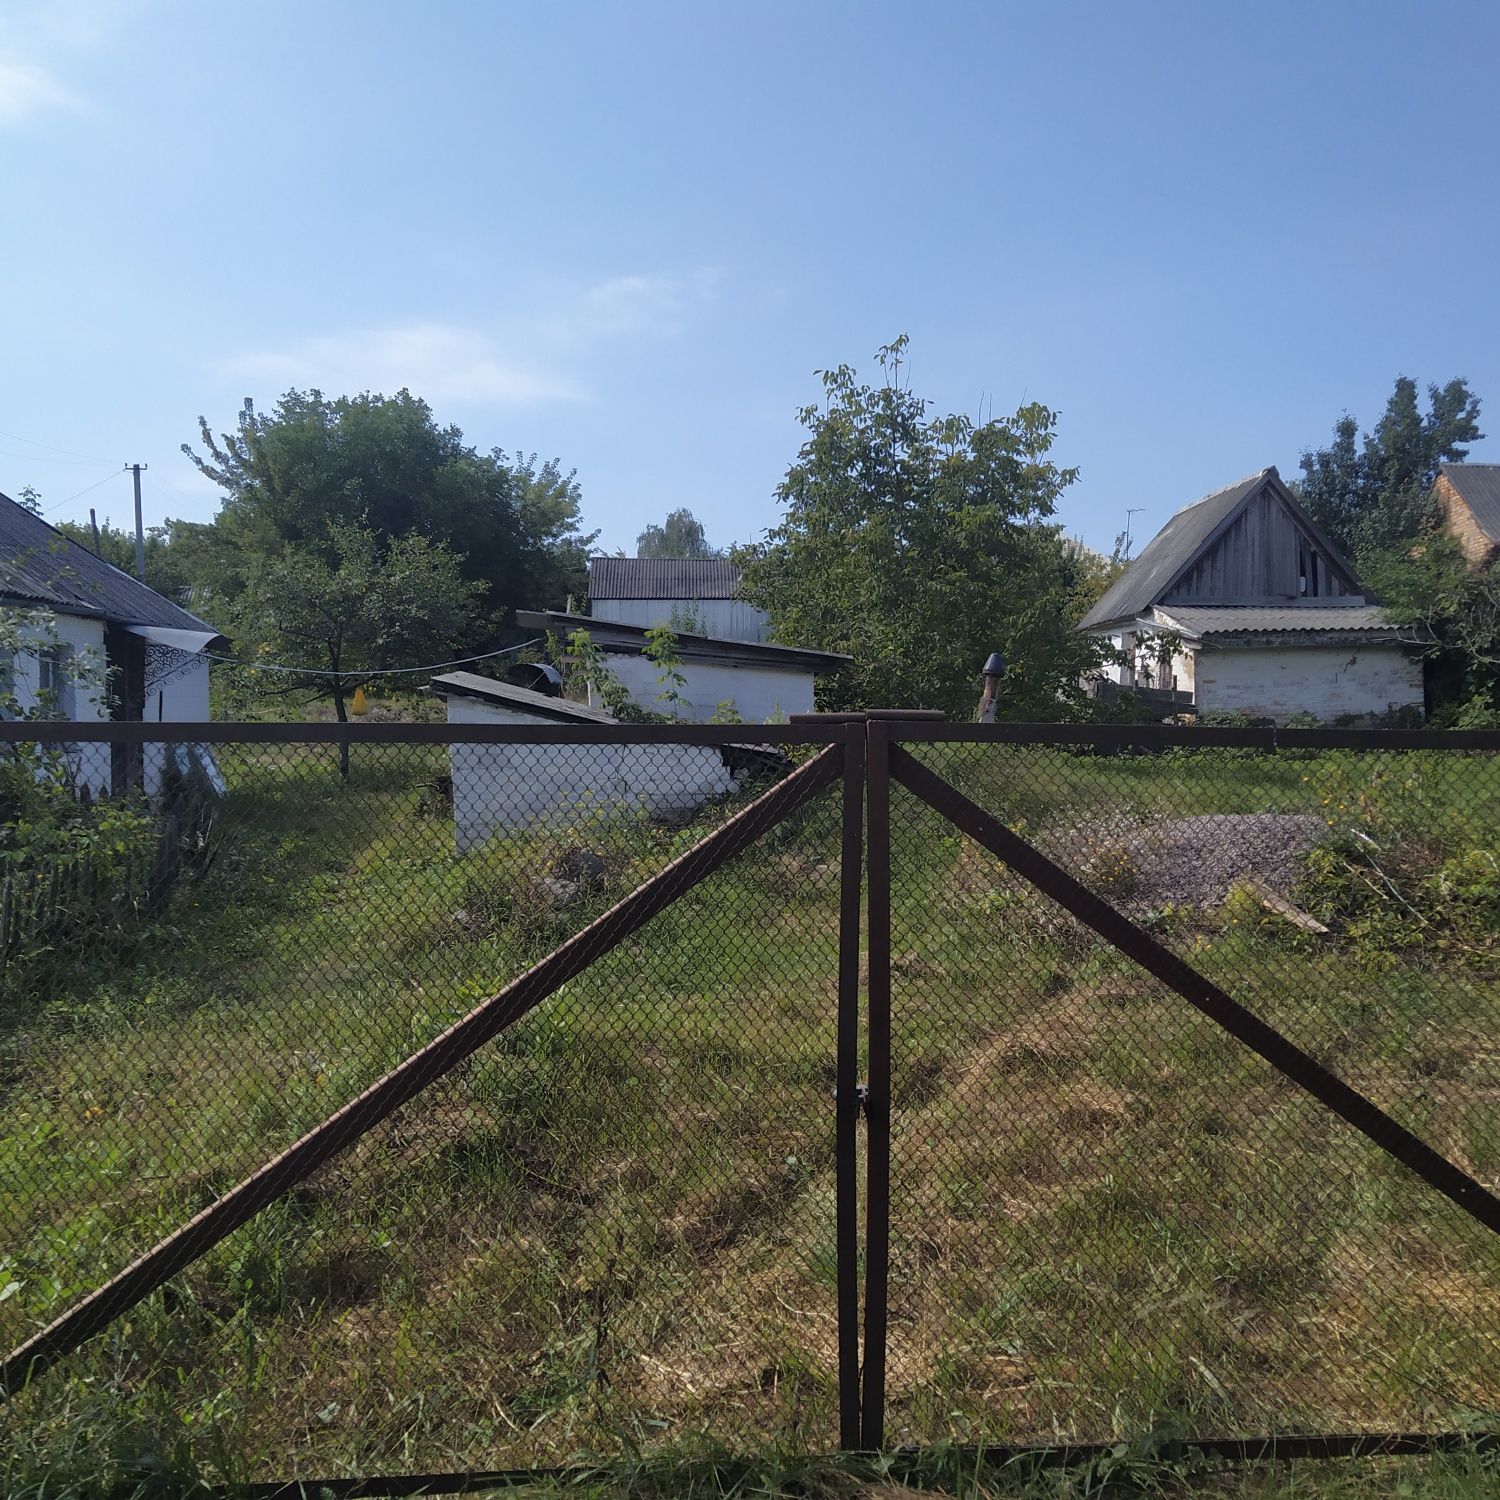 Продам будинок в селі Залевки